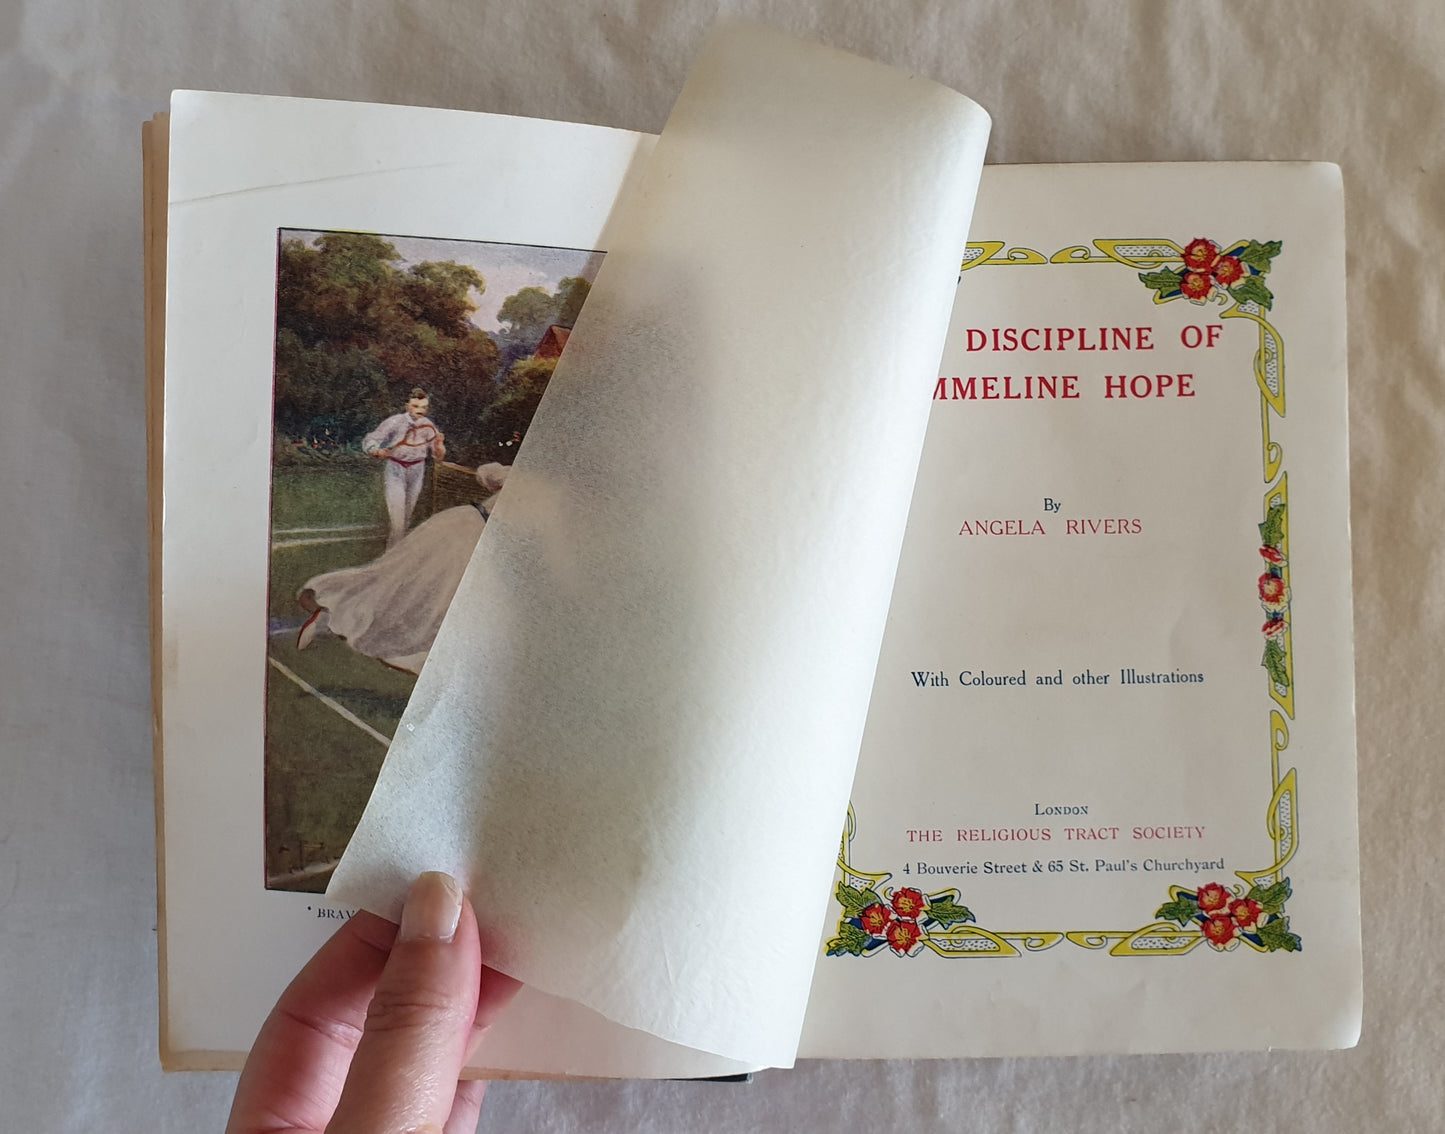 The Discipline of Emmeline Hope by Angela Rivers